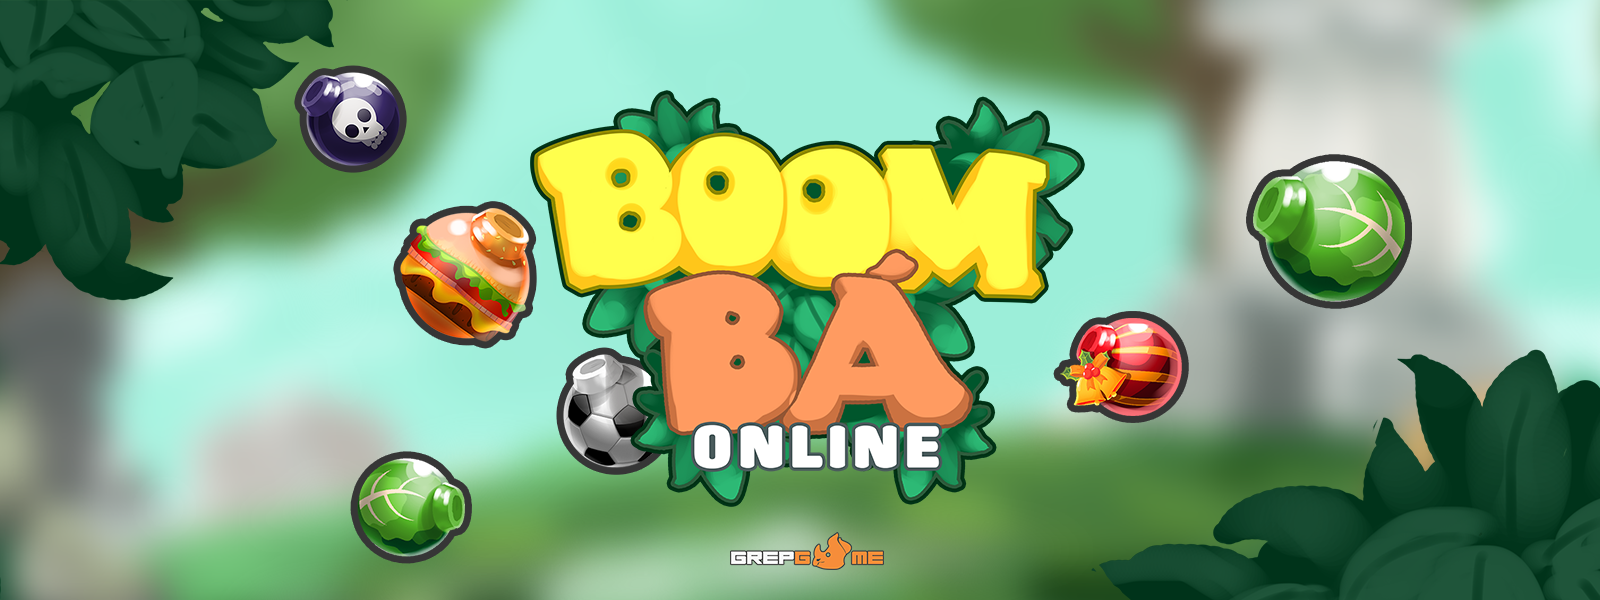 Boom Bá Online